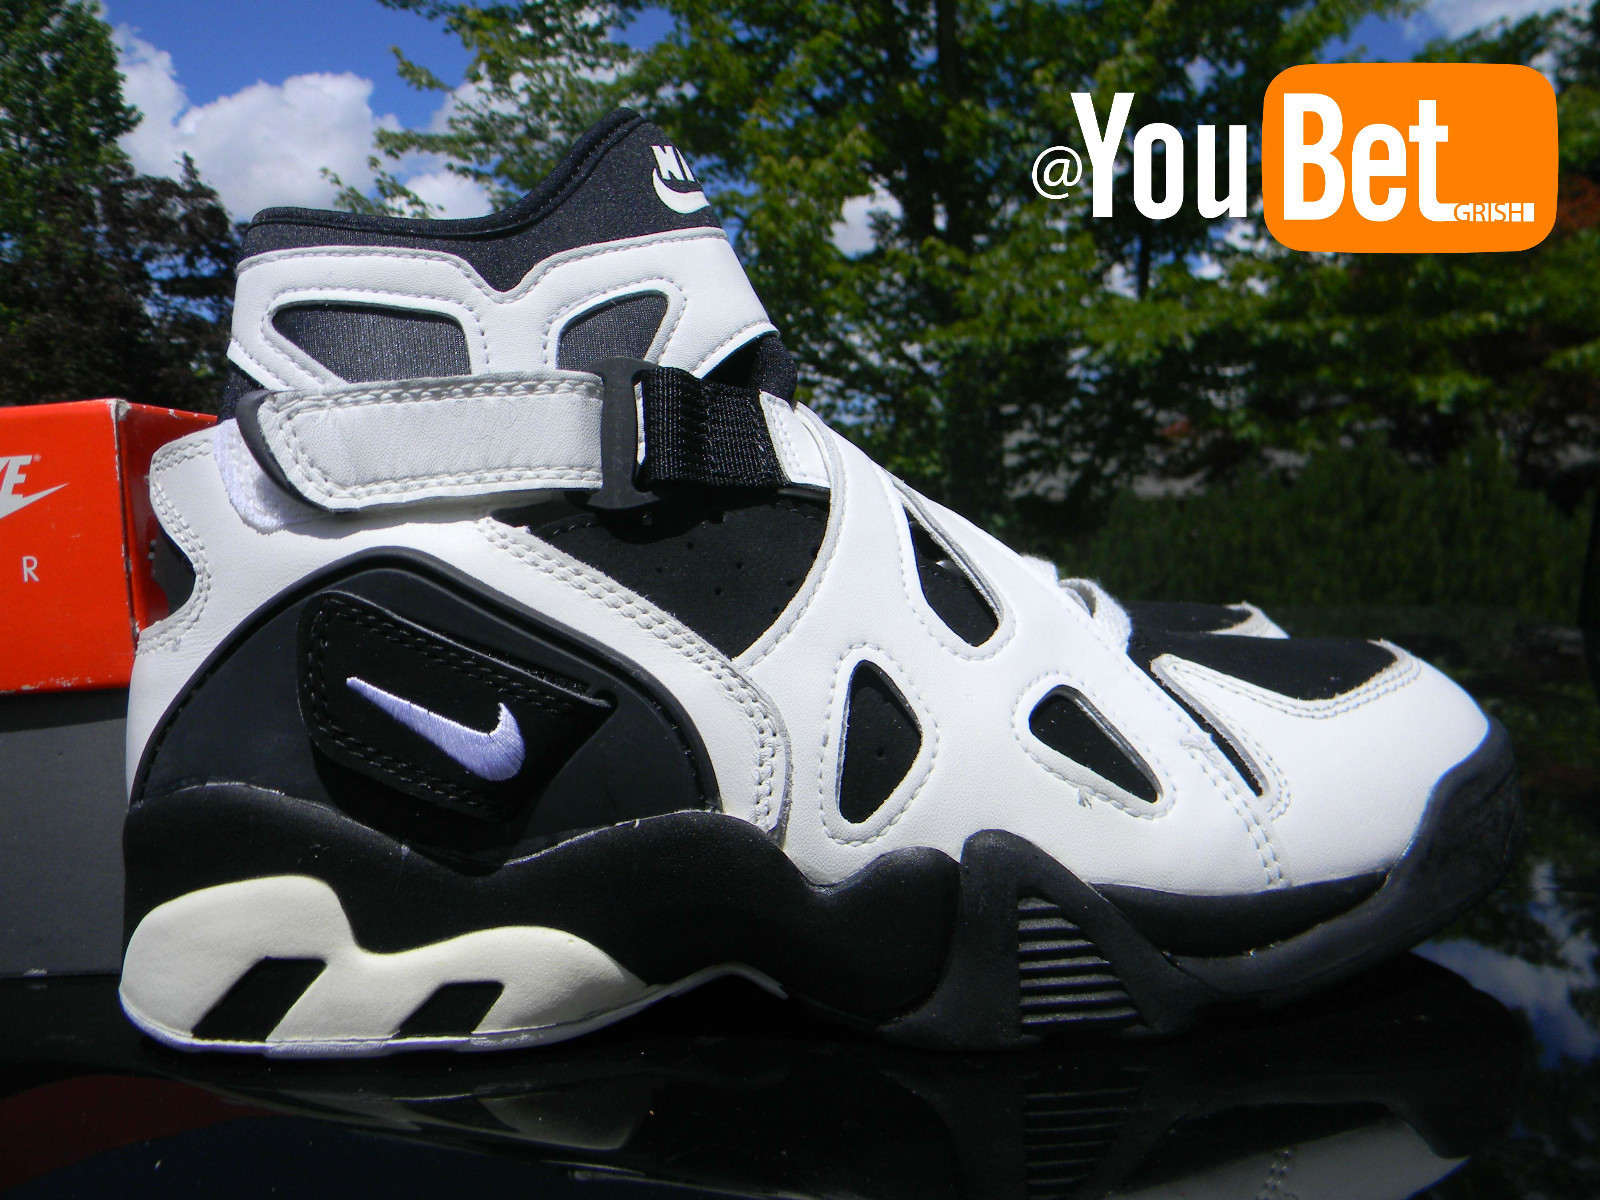 Fake or original? Reebok Michael Jordan Jersey : r/basketballjerseys